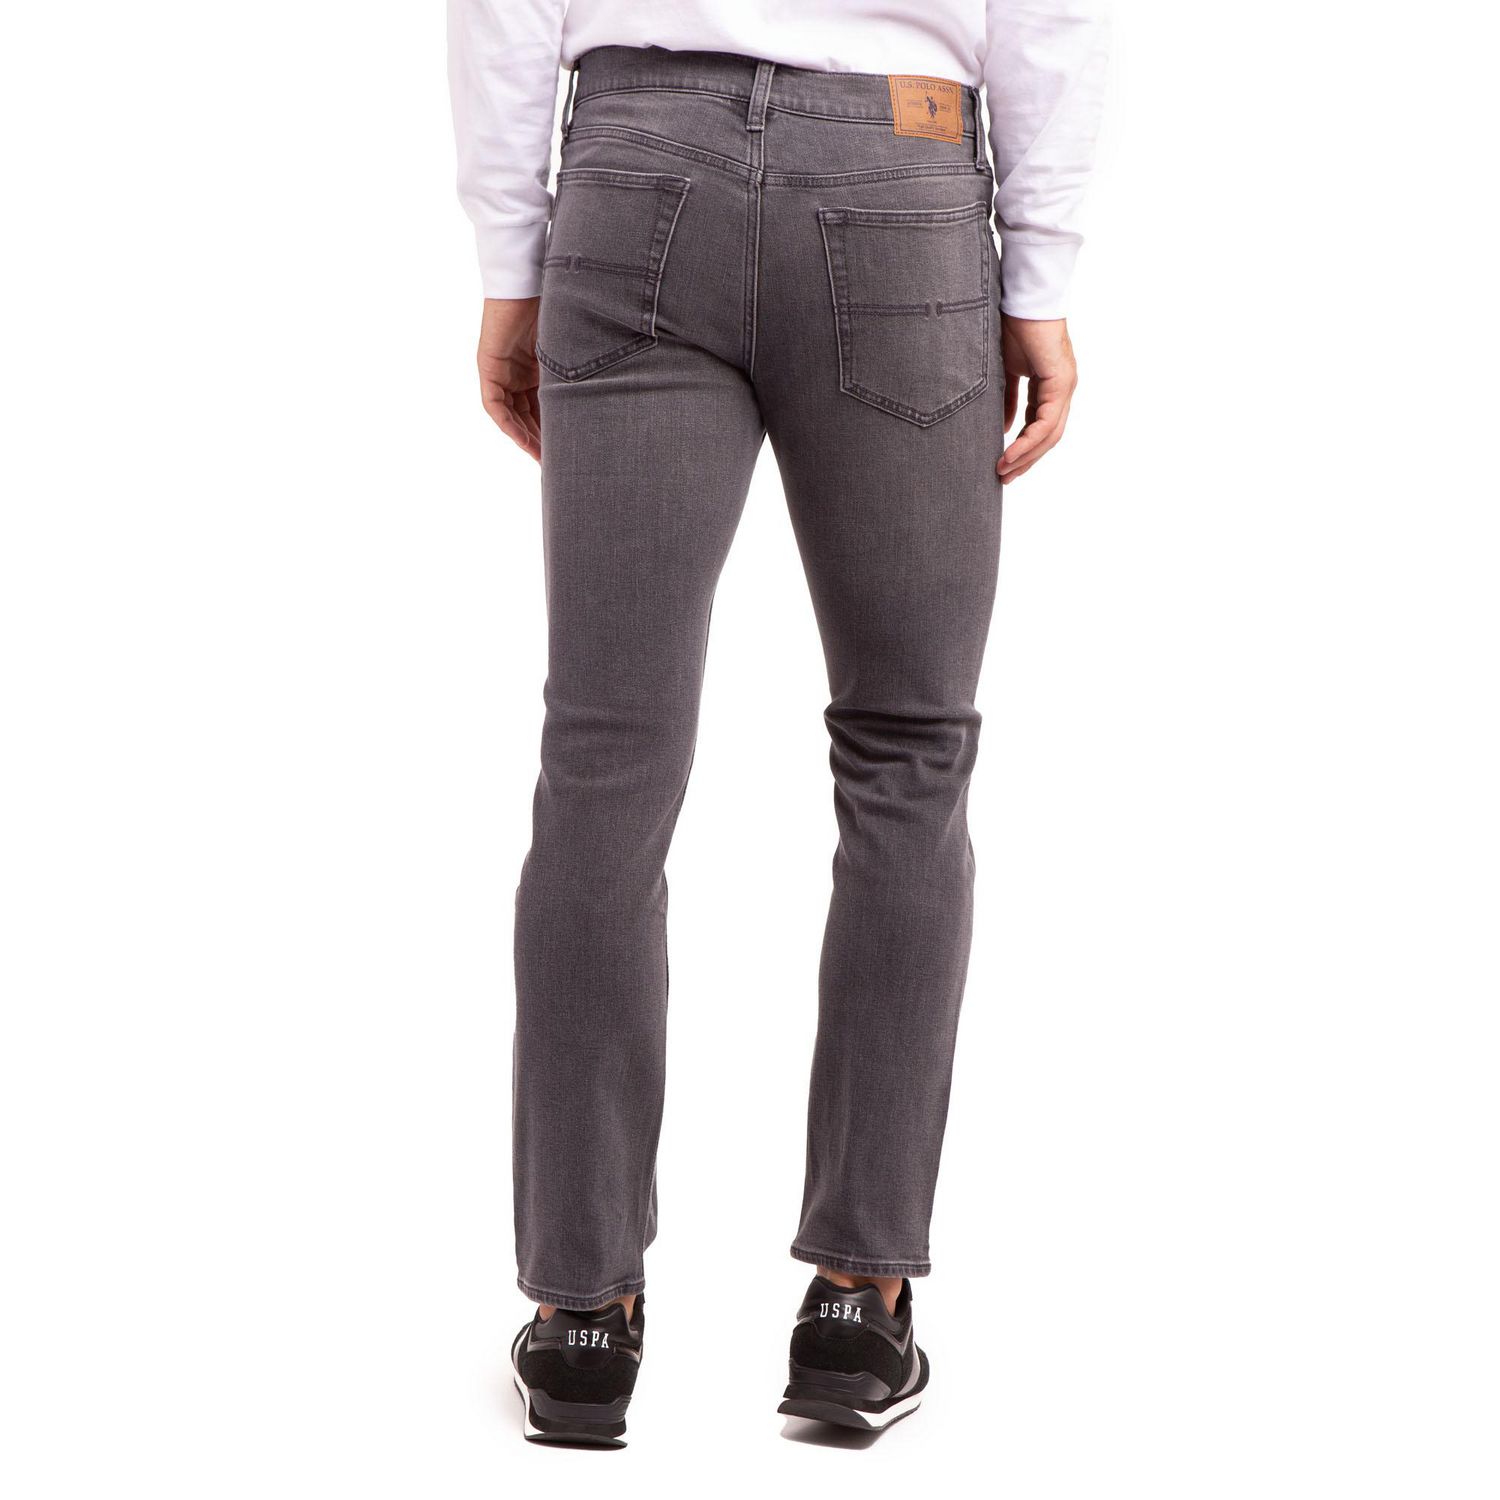 U.S. POLO ASSN Men's Slim Straight Jean